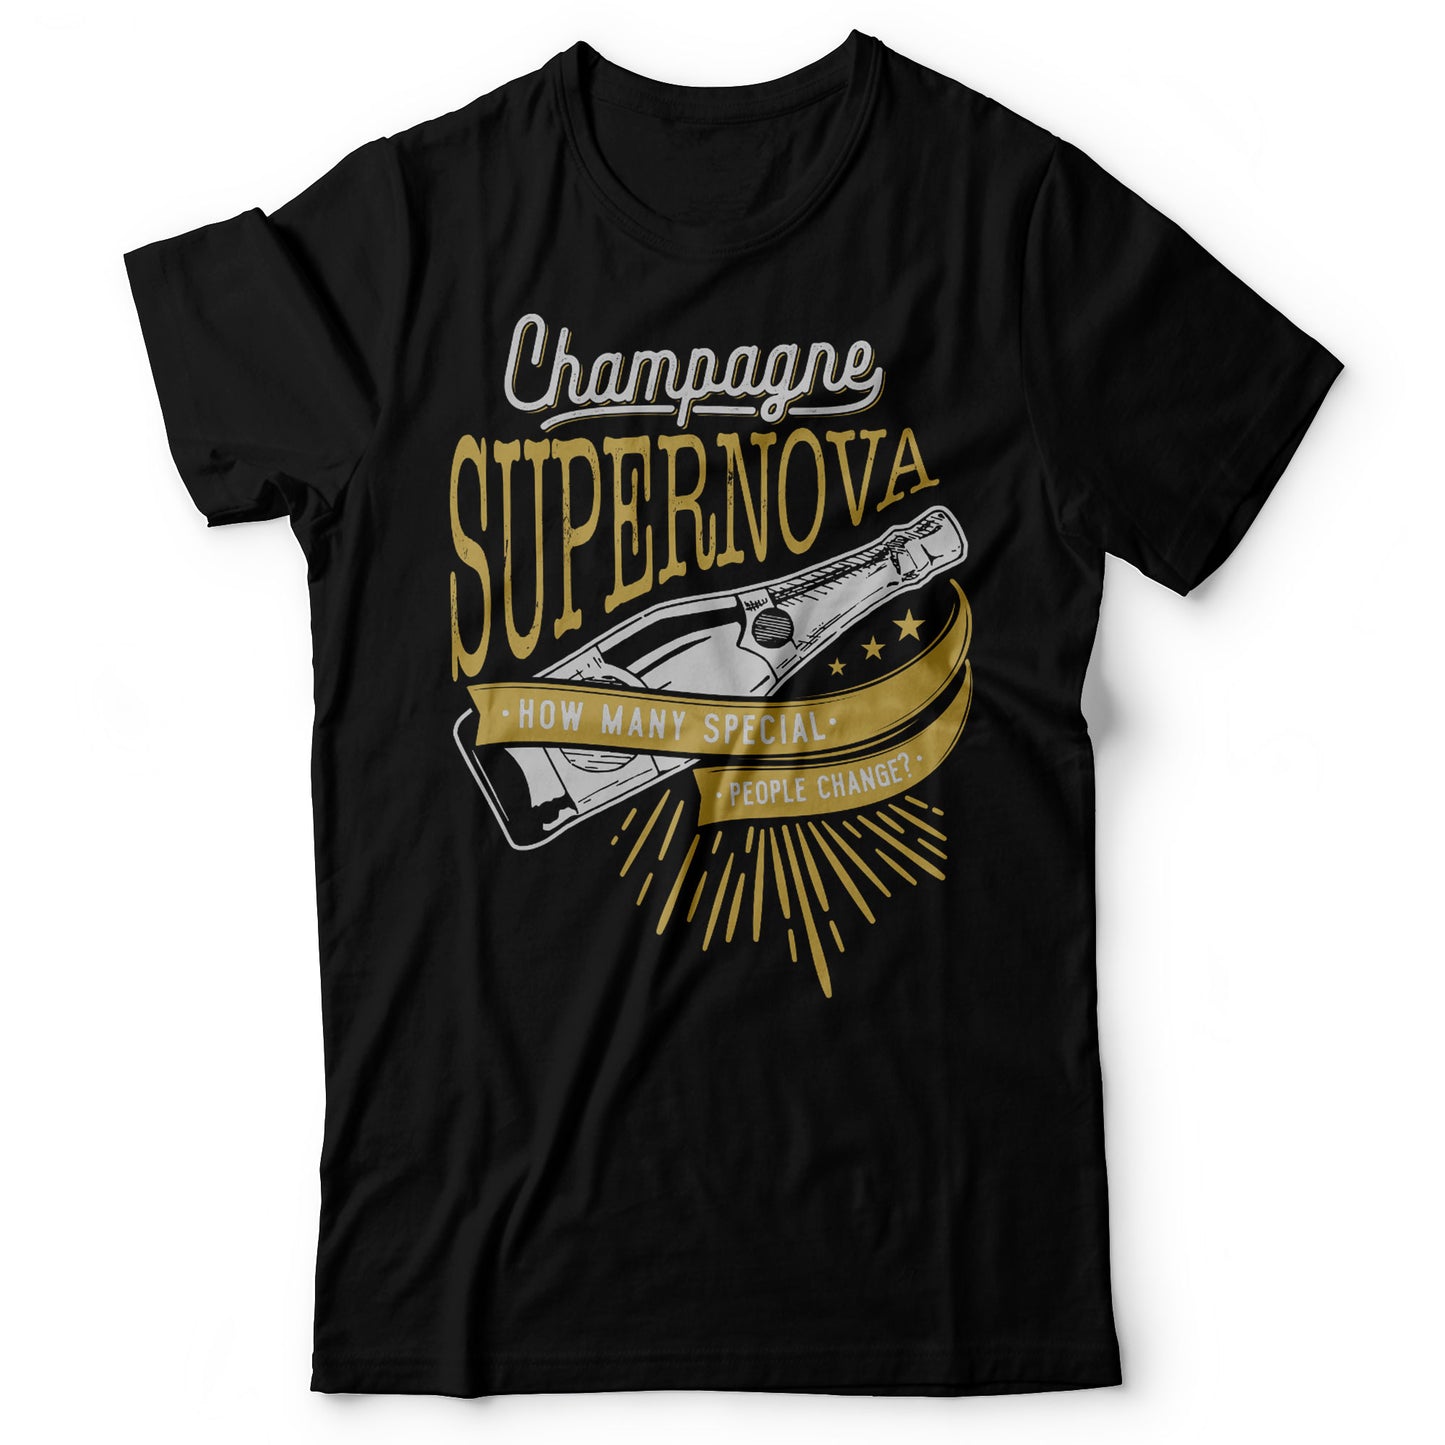 Oasis - Champagne Supernova - Men's T-shirt Black